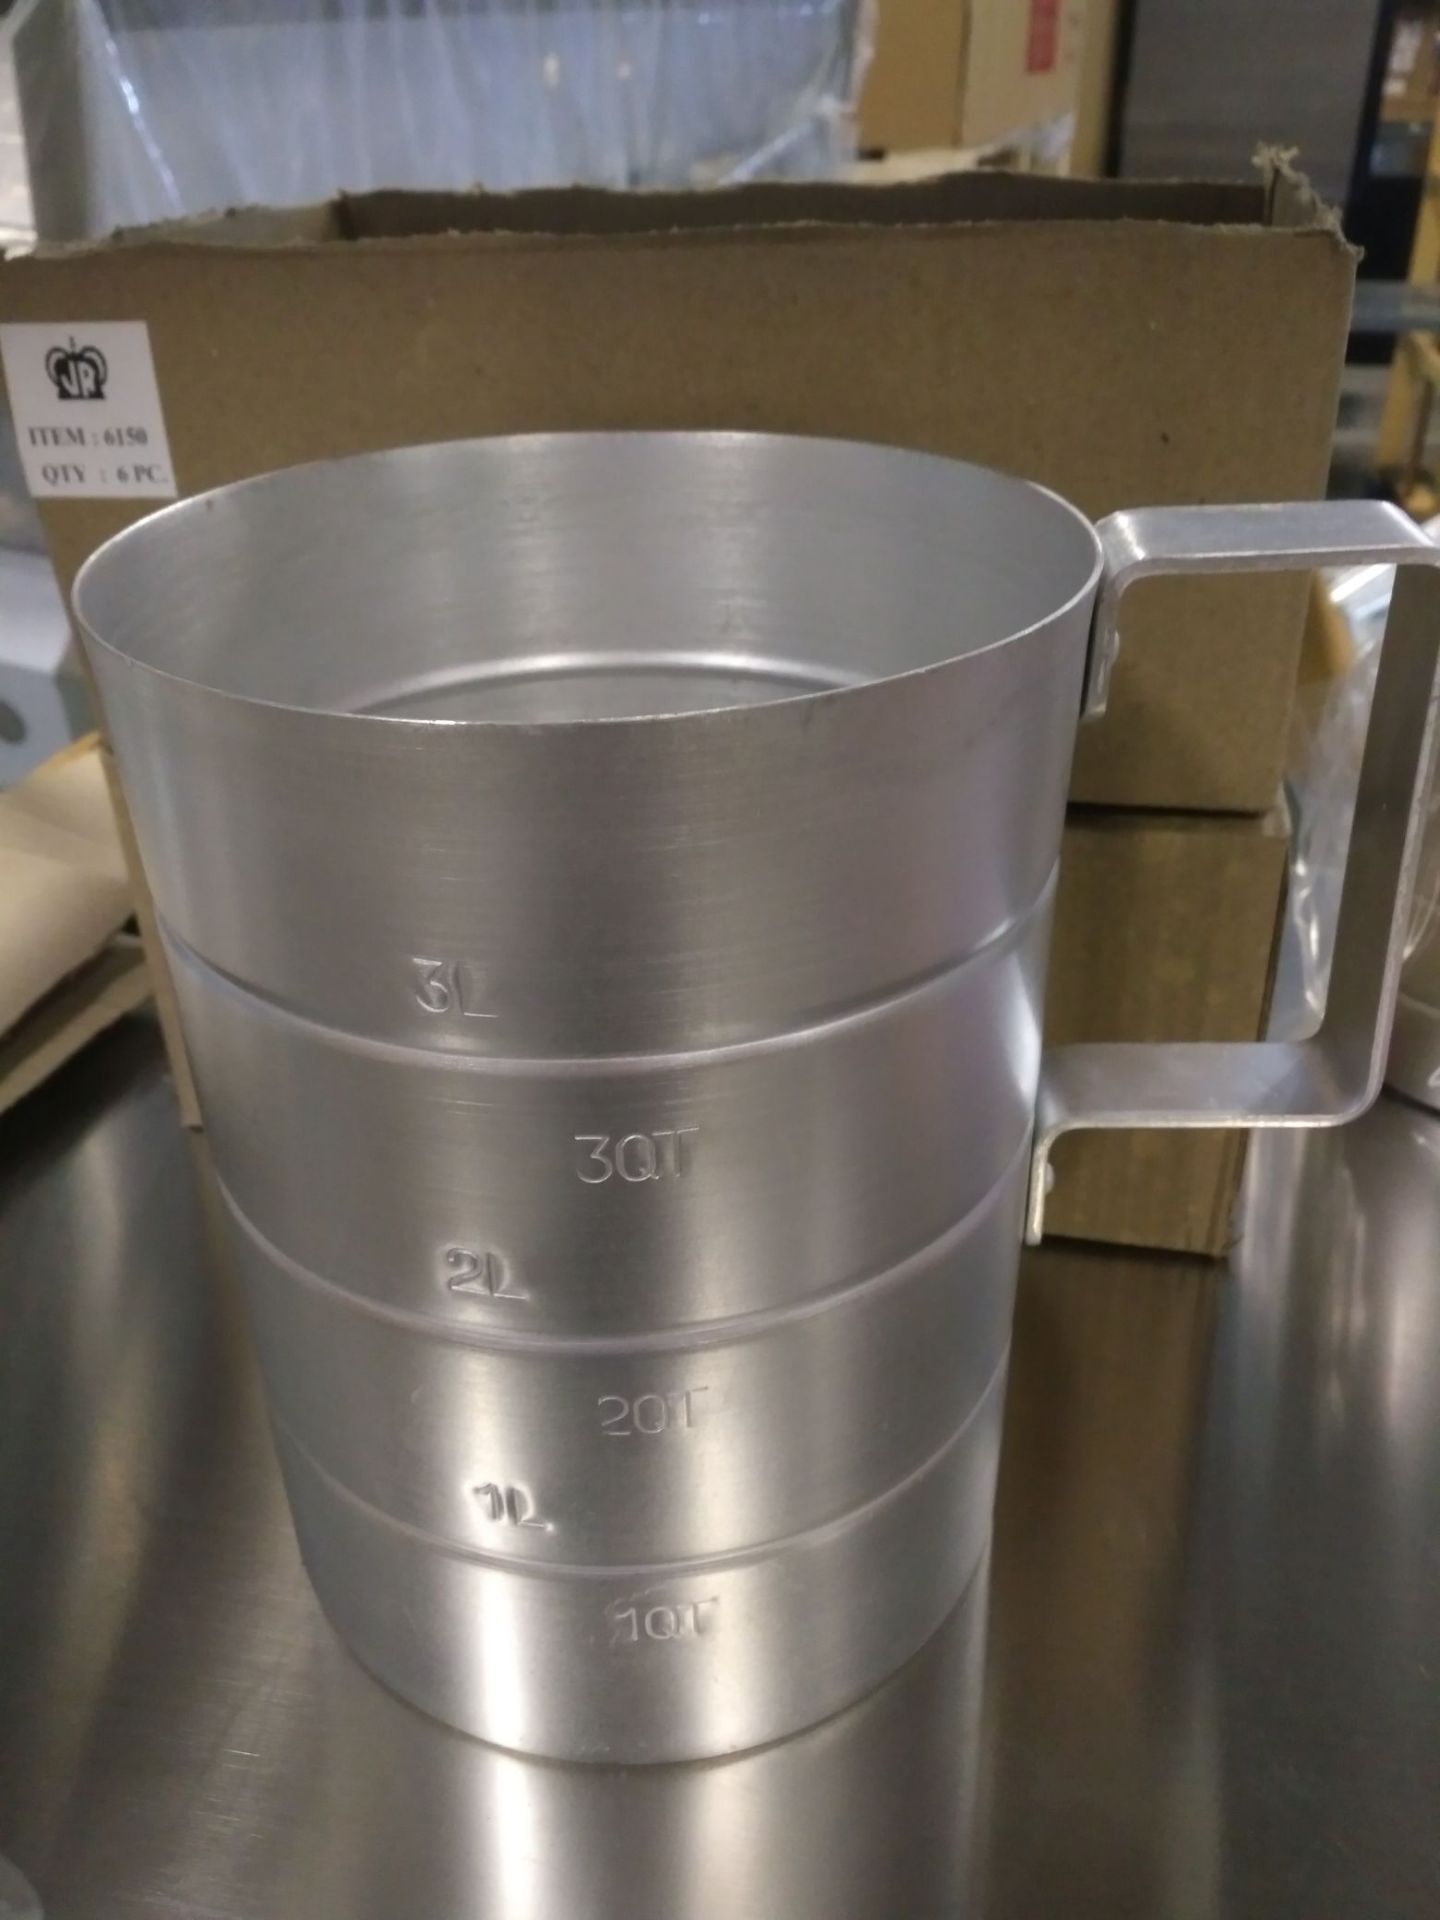 4qt Aluminum Dry Ingredient Bakers Measure, JR 6154